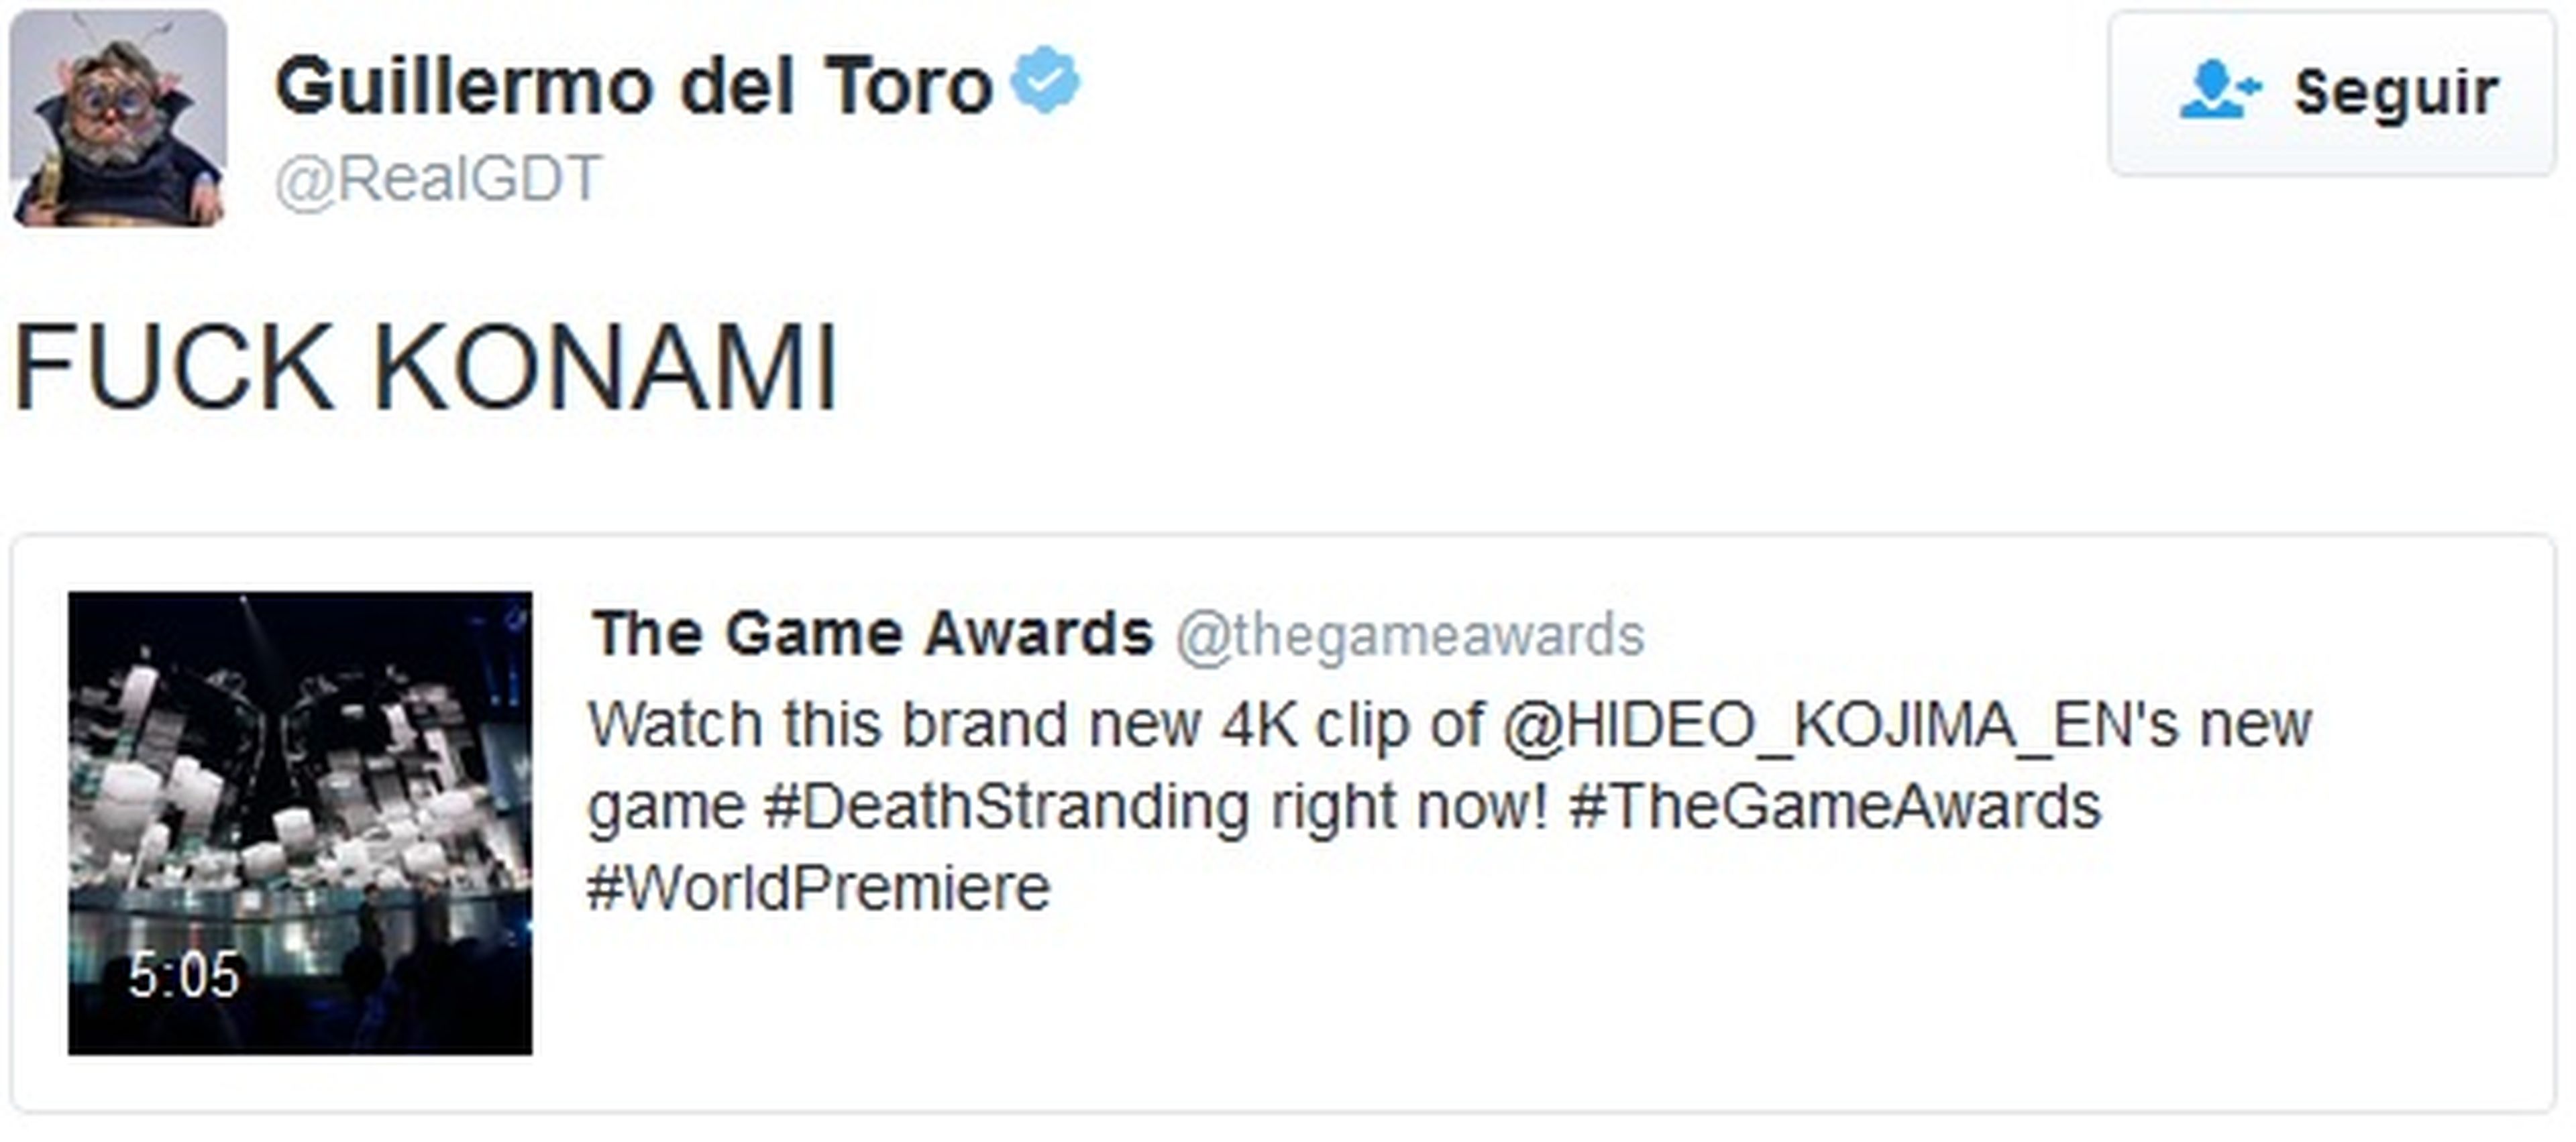 Tweet de Guillermo del Toro: "¡Que te jodan Konami!"